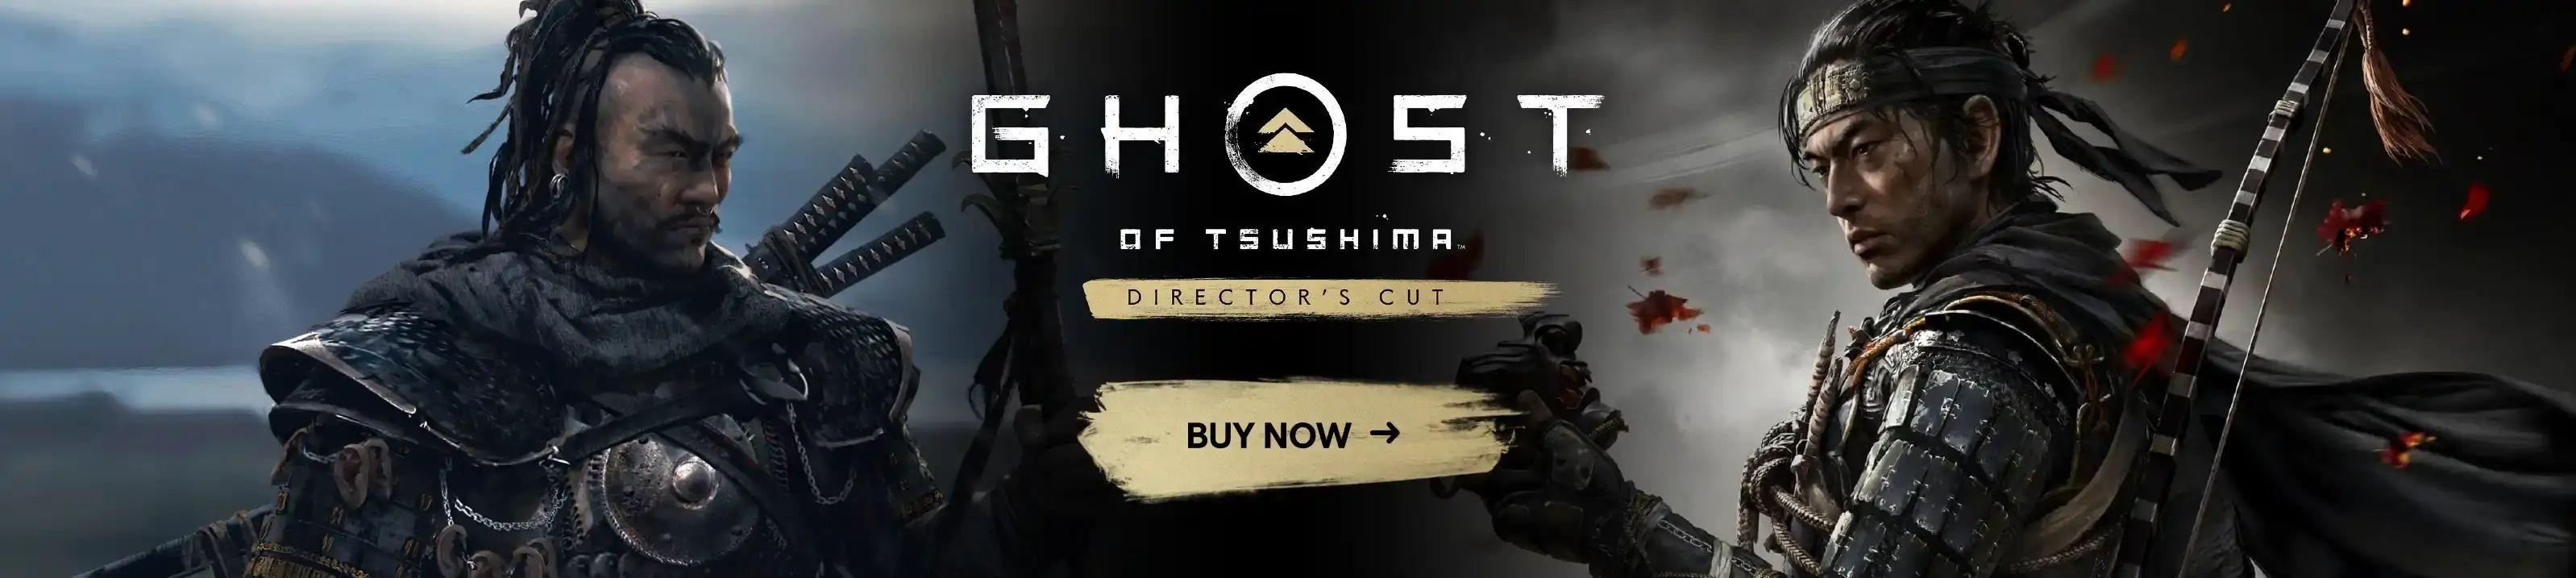 Ghost of Tsushima mobile